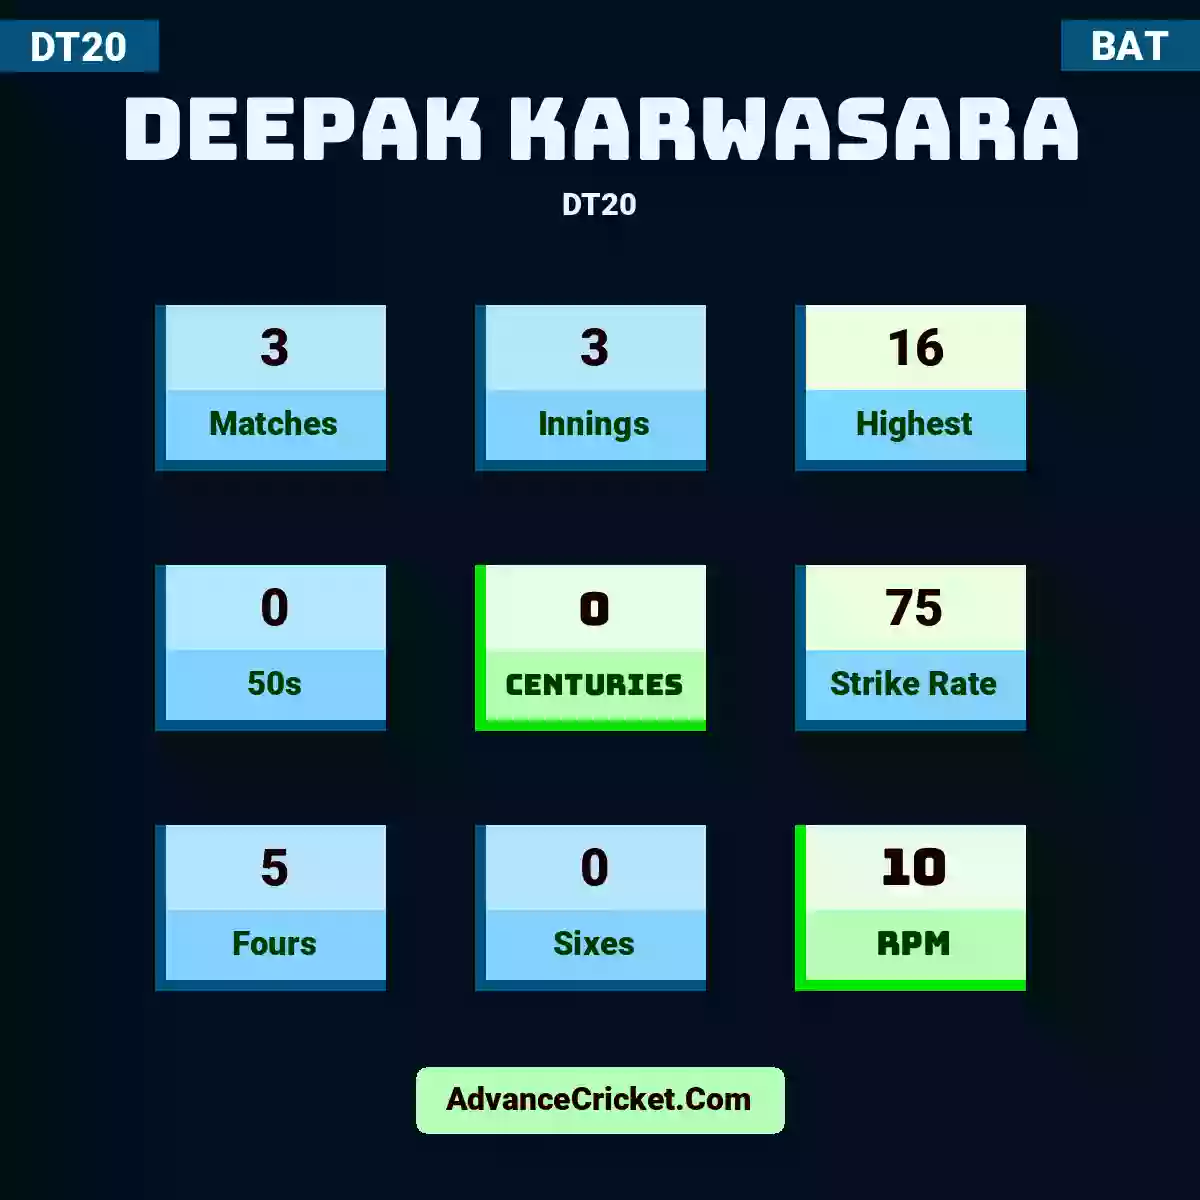 Deepak Karwasara DT20 , Deepak Karwasara played 3 matches, scored 16 runs as highest, 0 half-centuries, and 0 centuries, with a strike rate of 75. D.Karwasara hit 5 fours and 0 sixes, with an RPM of 10.